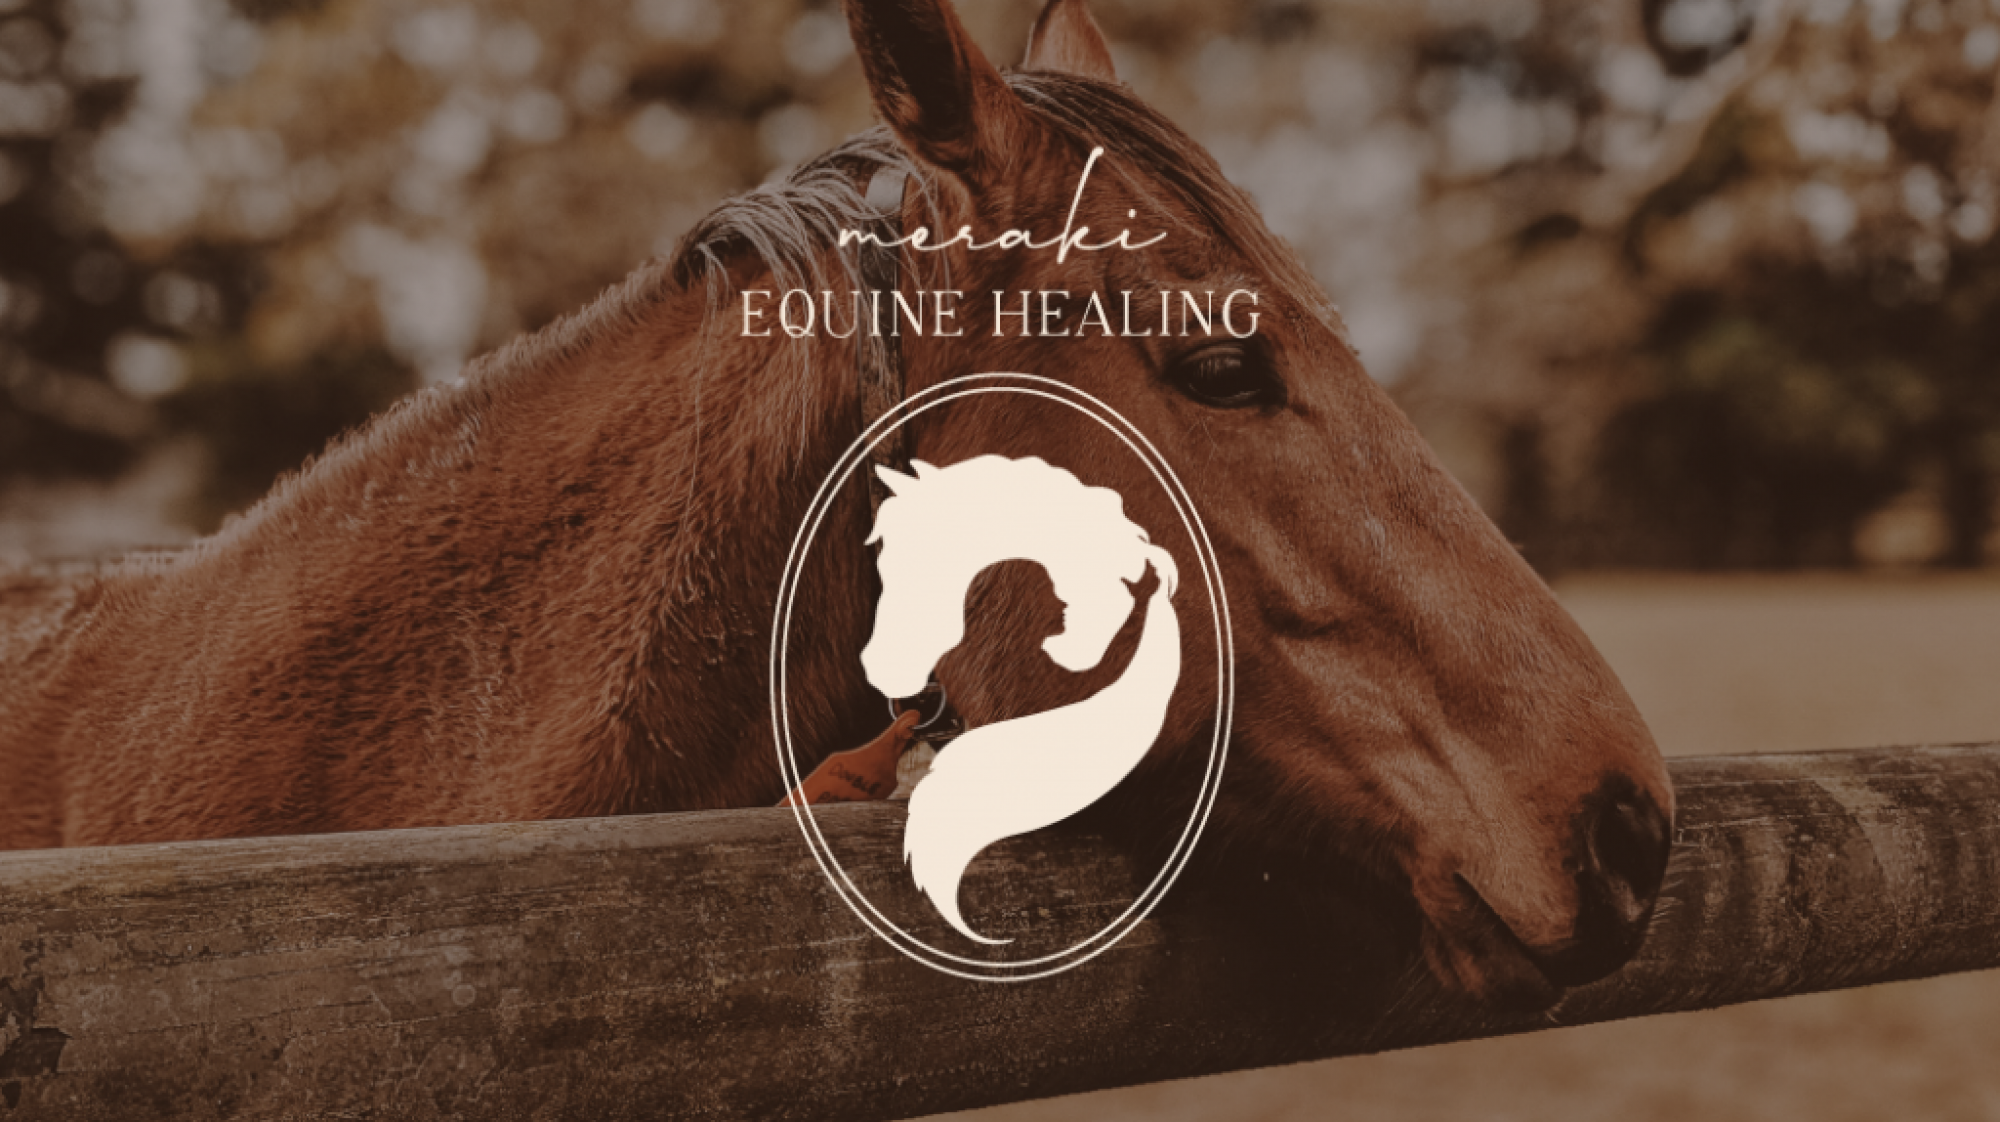 Meraki Equine Healing